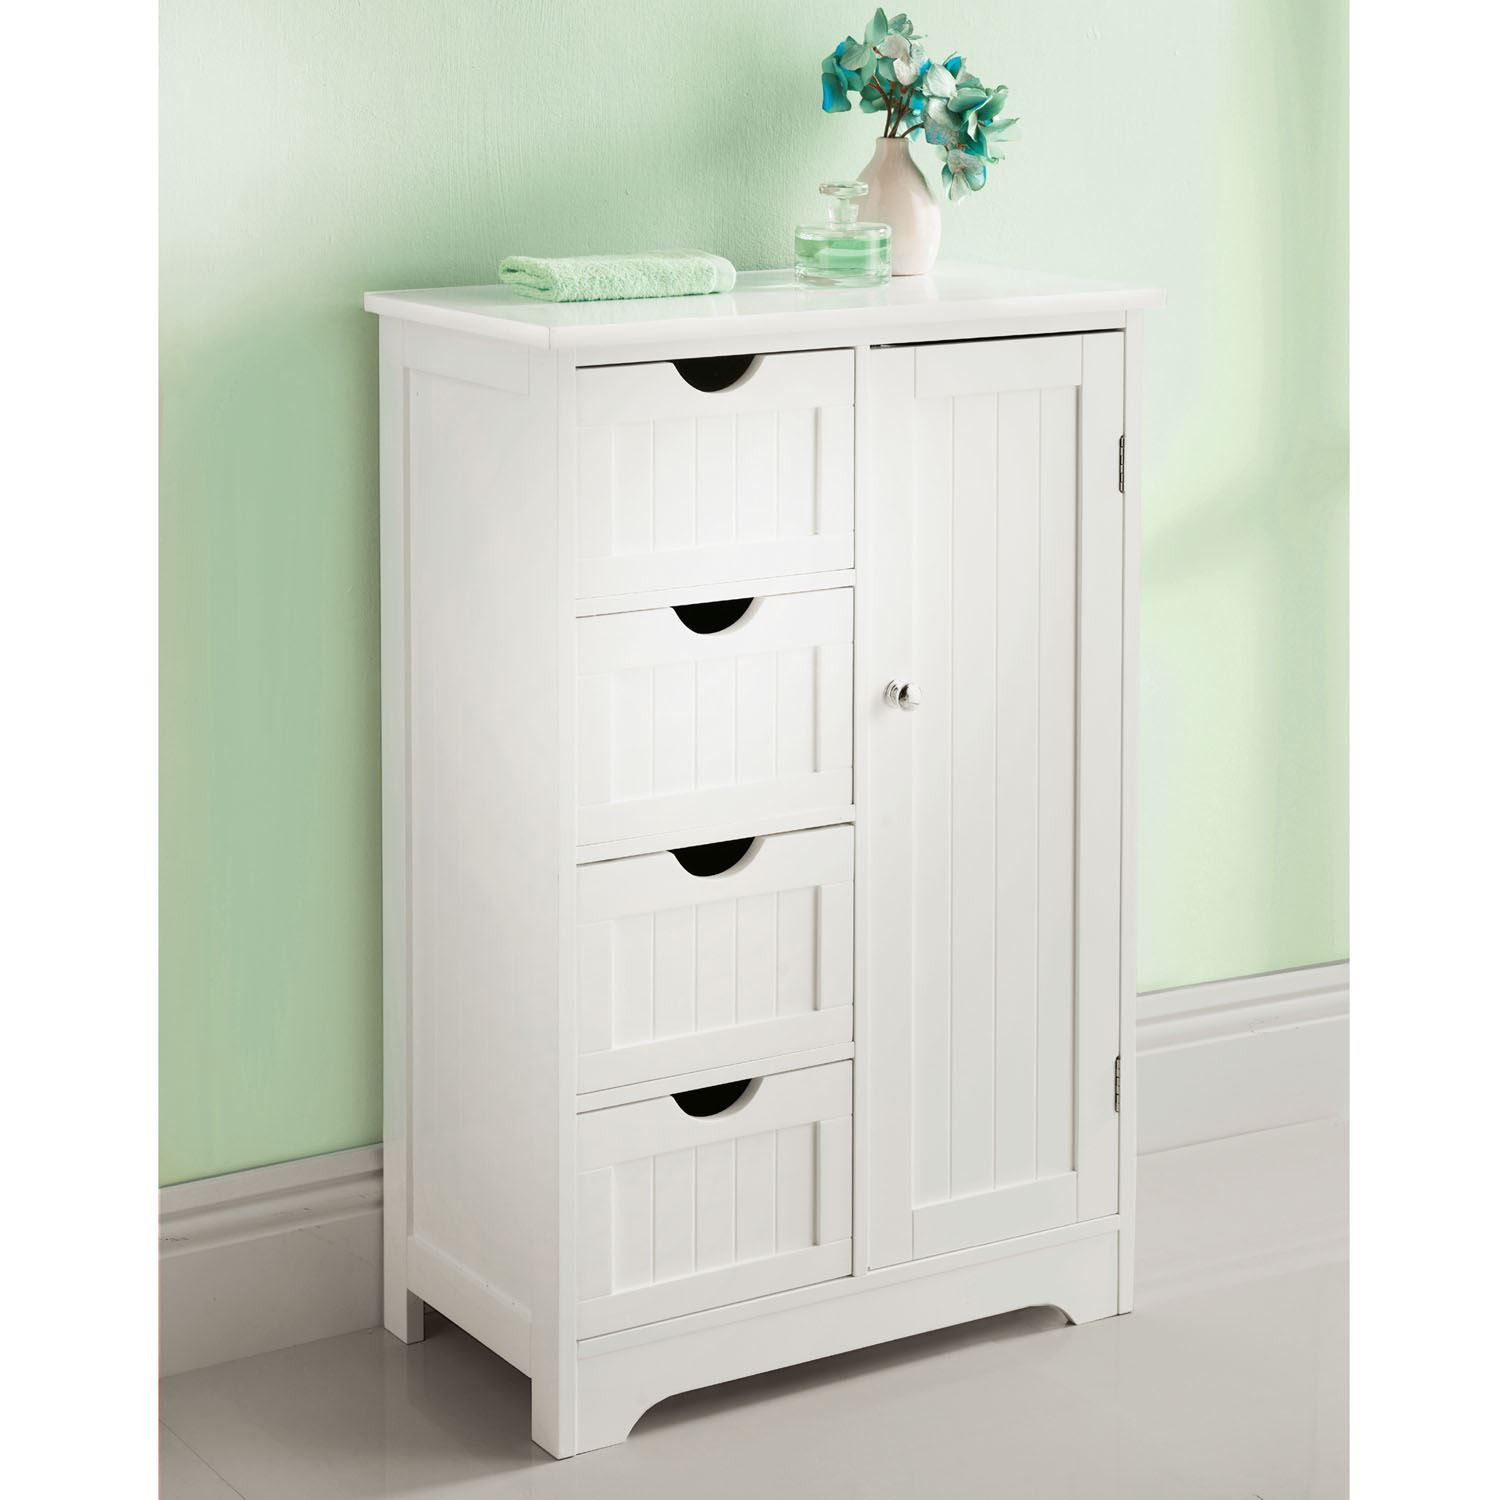 Storage Cabinet For Bedrooms
 White Wooden Bathroom Cabinet Shelf Cupboard Bedroom